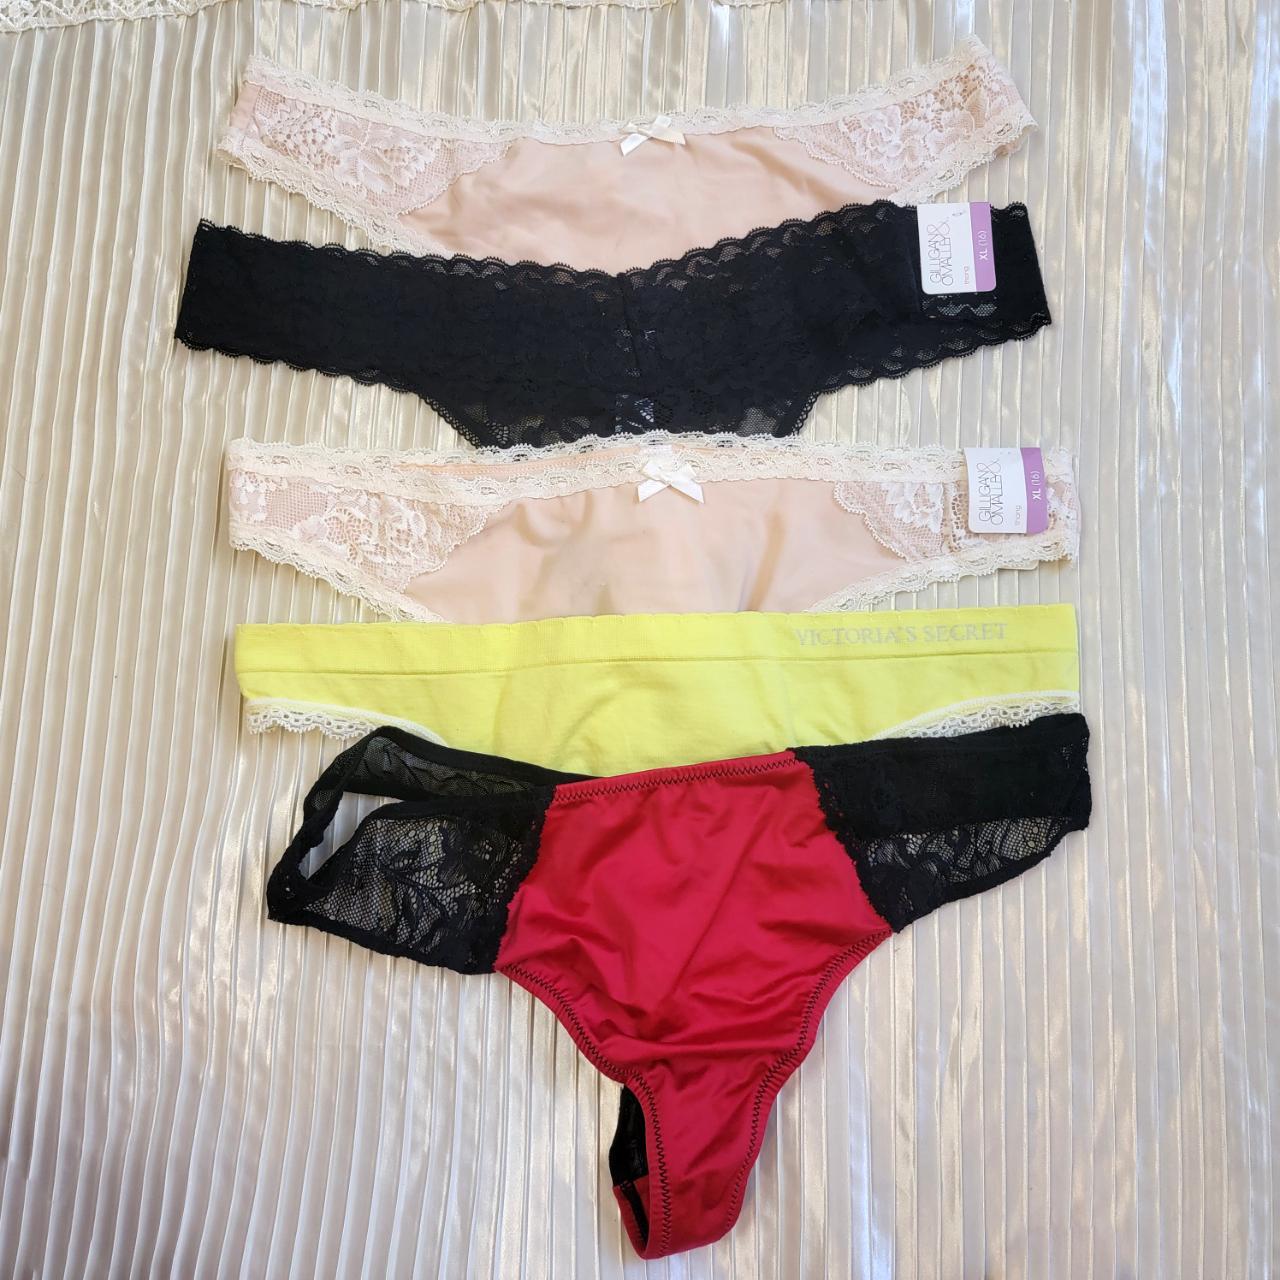 fun panties bundle of 6 Victoria Secret fun... - Depop